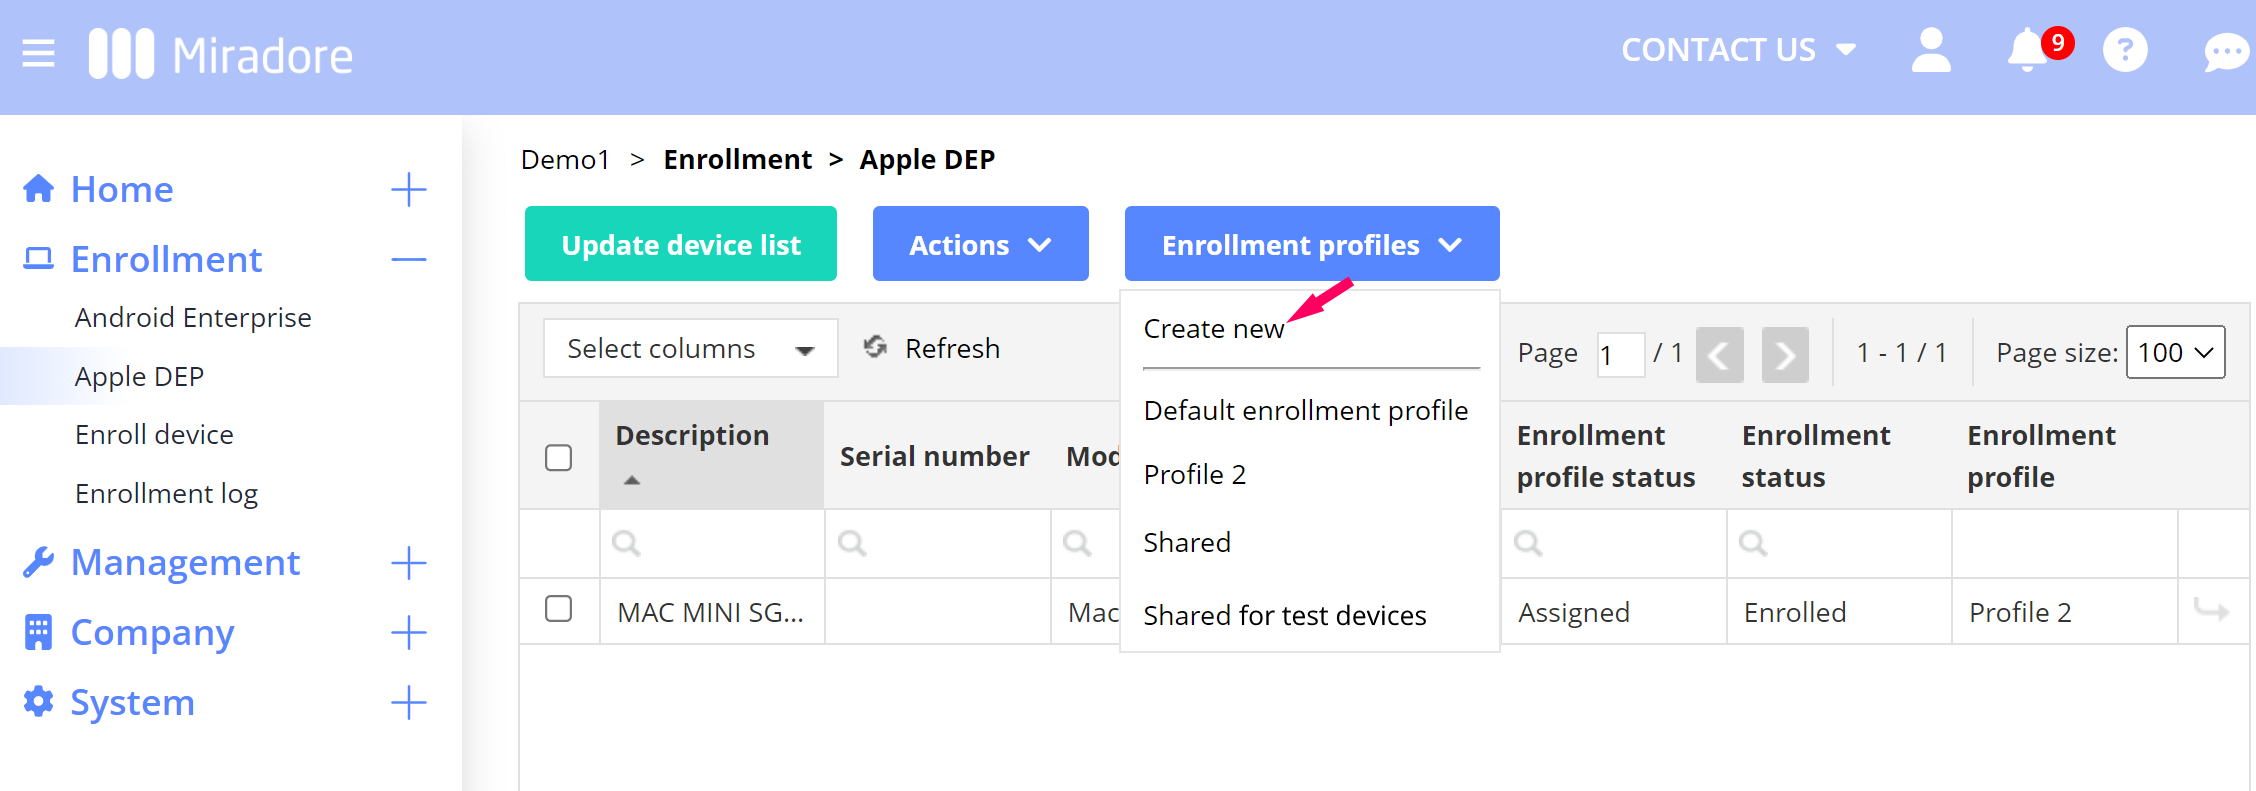 New Apple ADE (DEP) enrollment profile